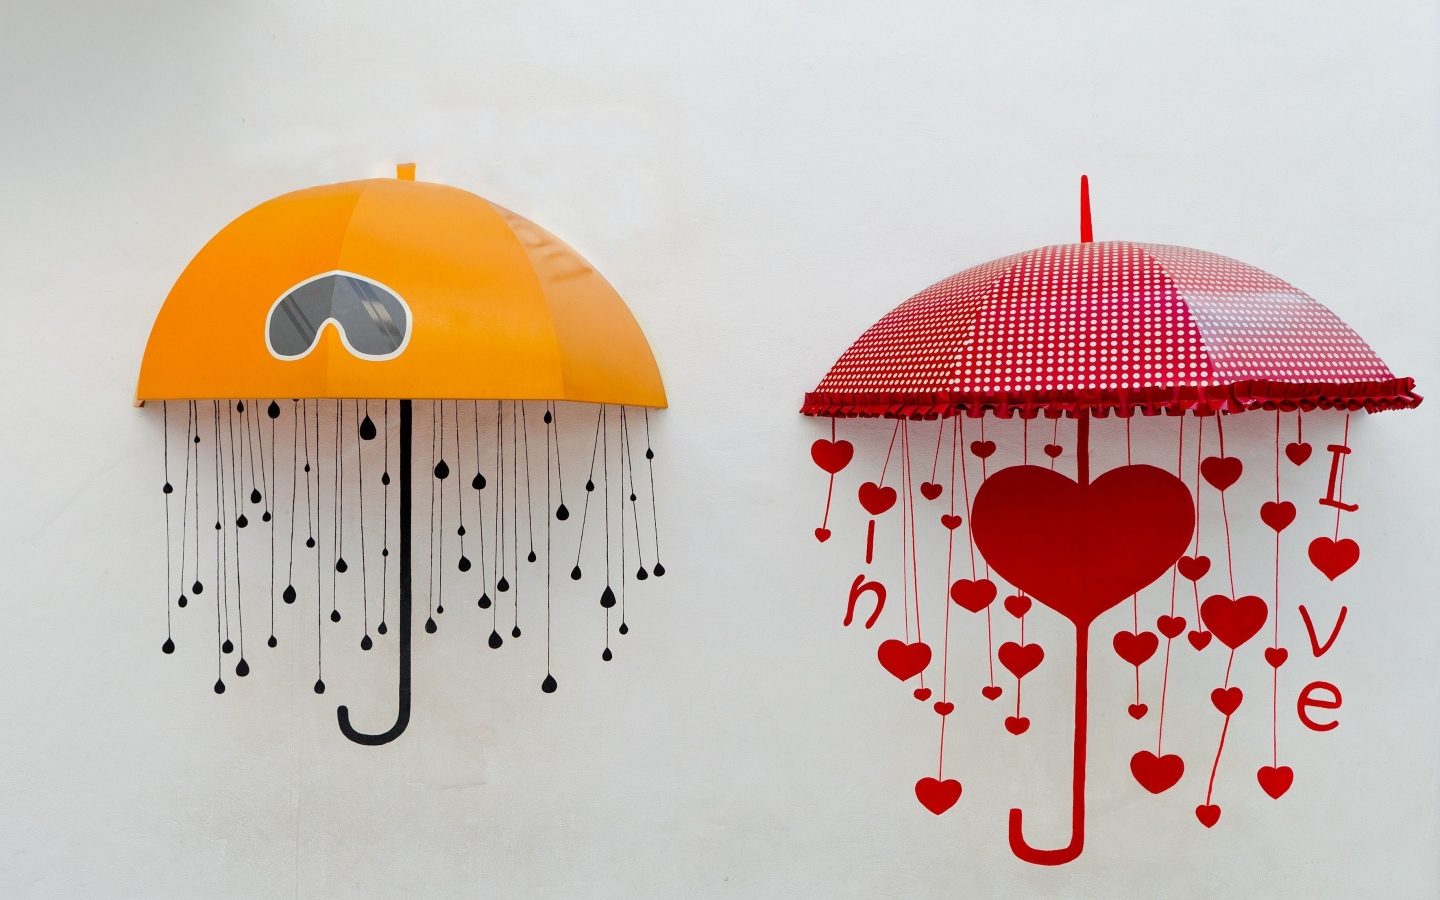 Umbrella of Love for 1440 x 900 widescreen resolution